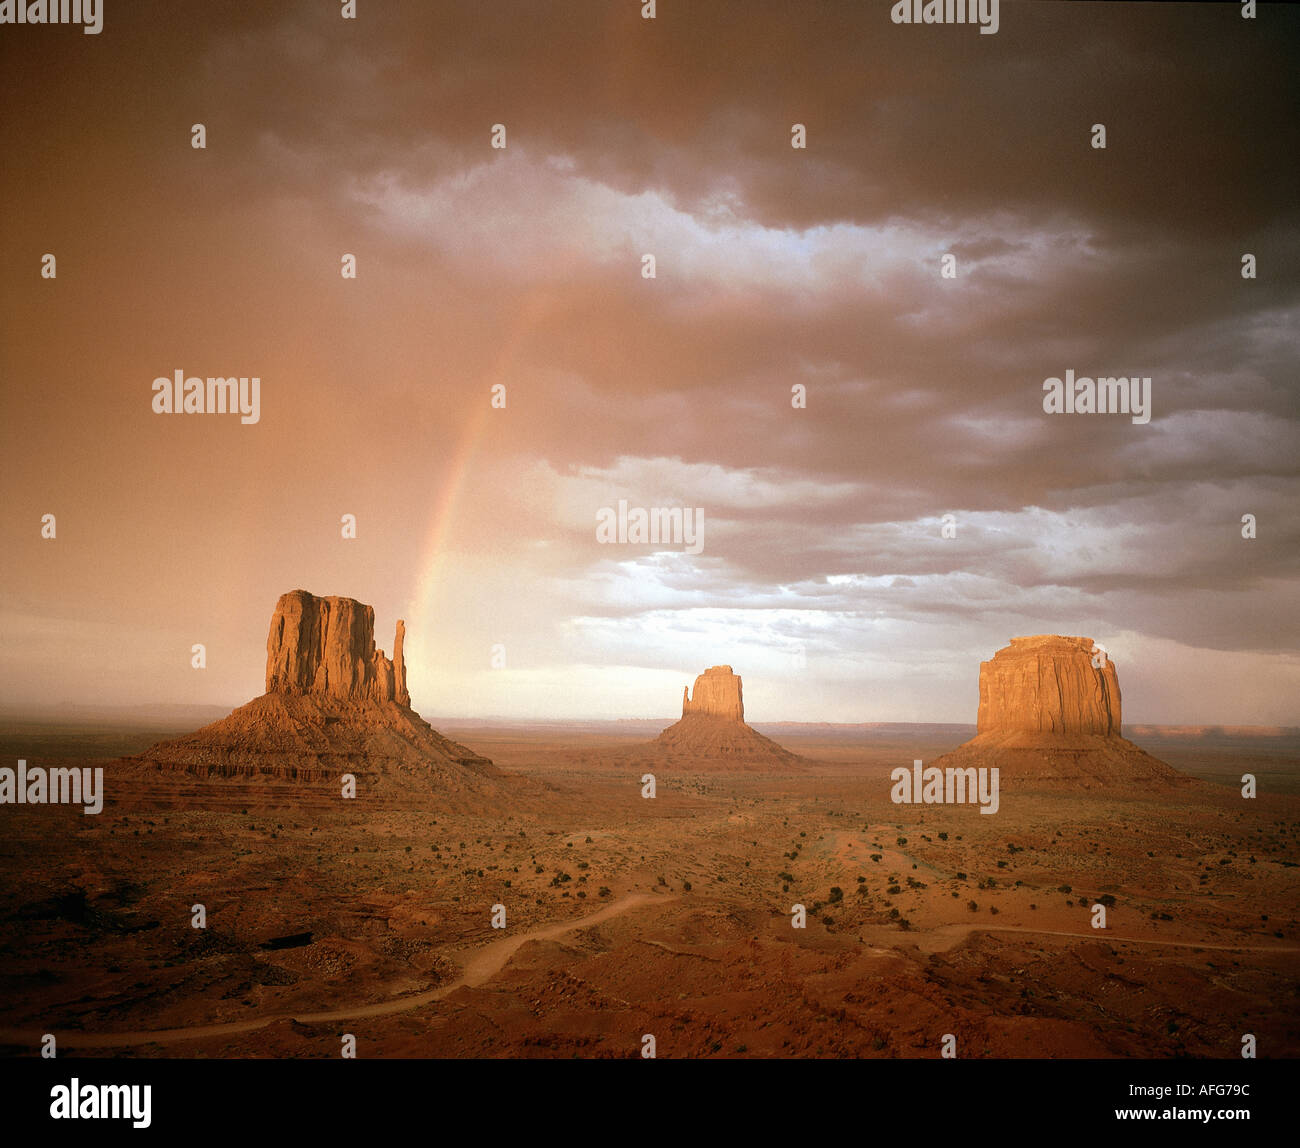 USA - ARIZONA: Monument Valley Stock Photo